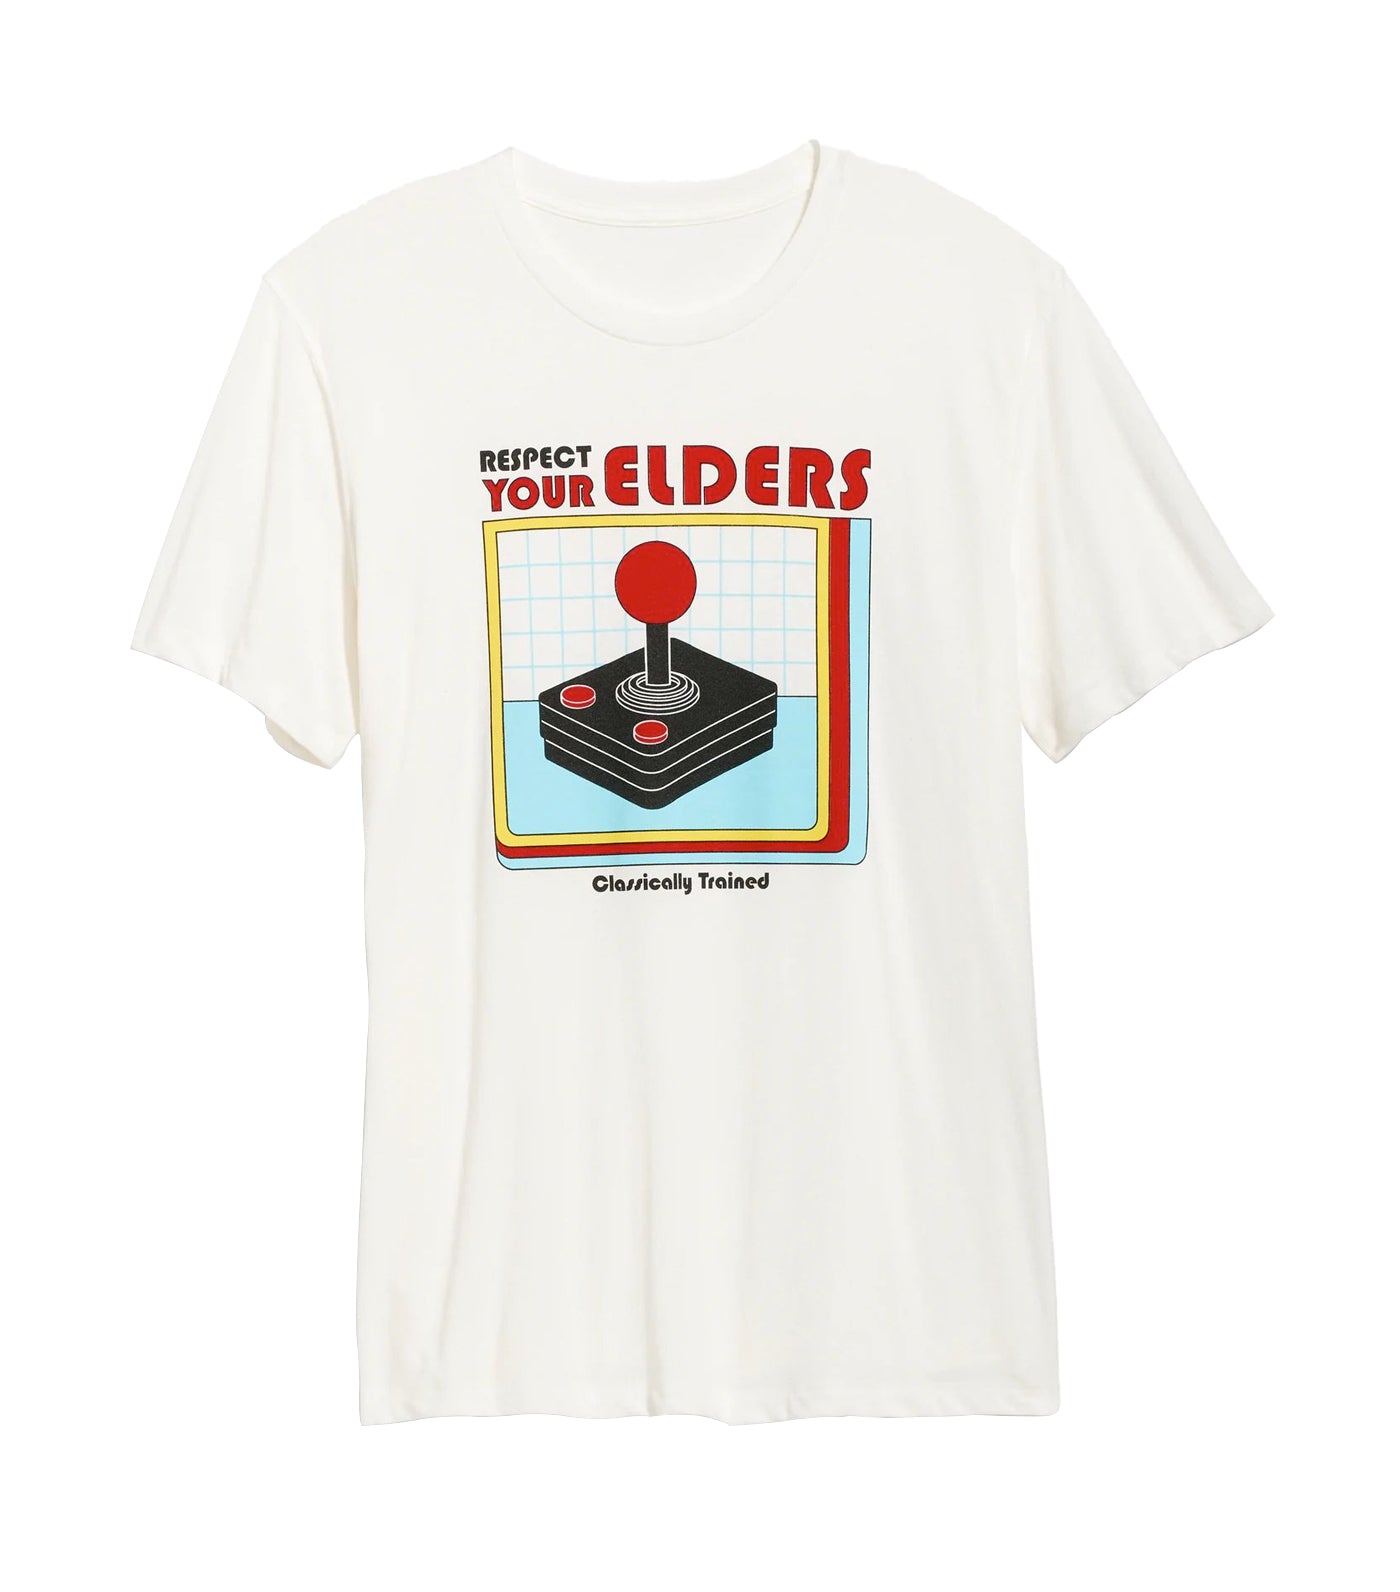 Soft-Washed Graphic T-Shirt for Men Sea Salt and Vinegar